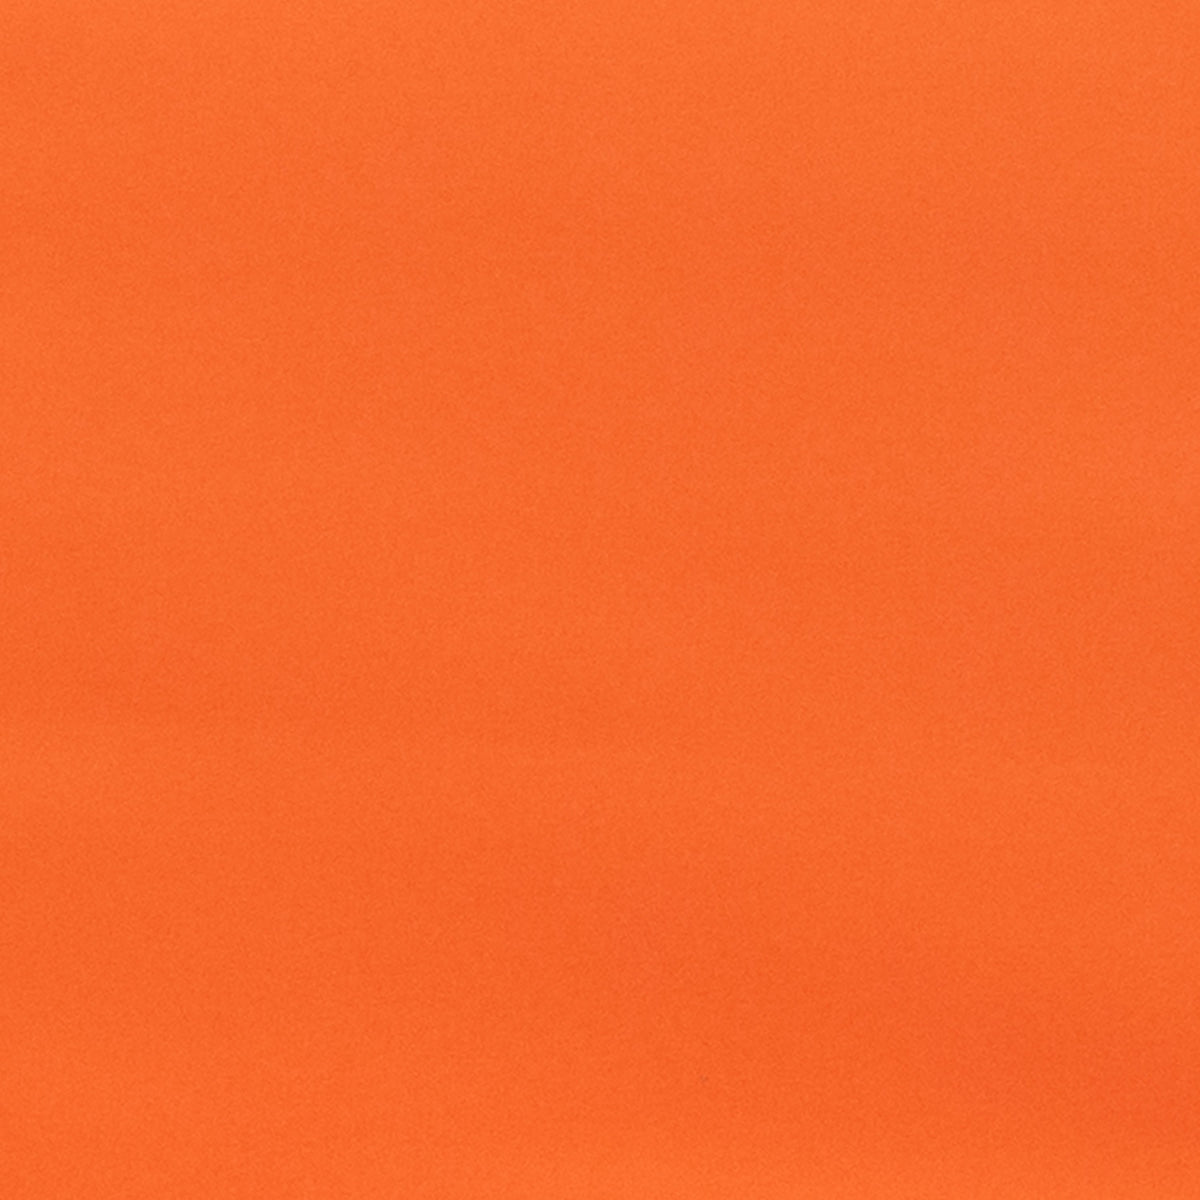 Orange |#| 500 lb. Rated Lightweight Stadium Chair-Handle-Padded Seat, Orange